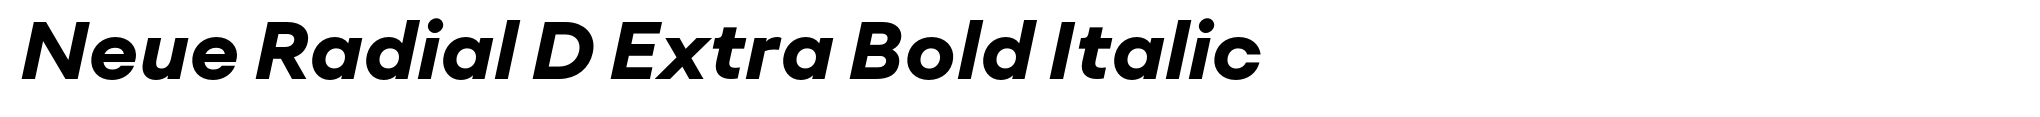 Neue Radial D Extra Bold Italic image